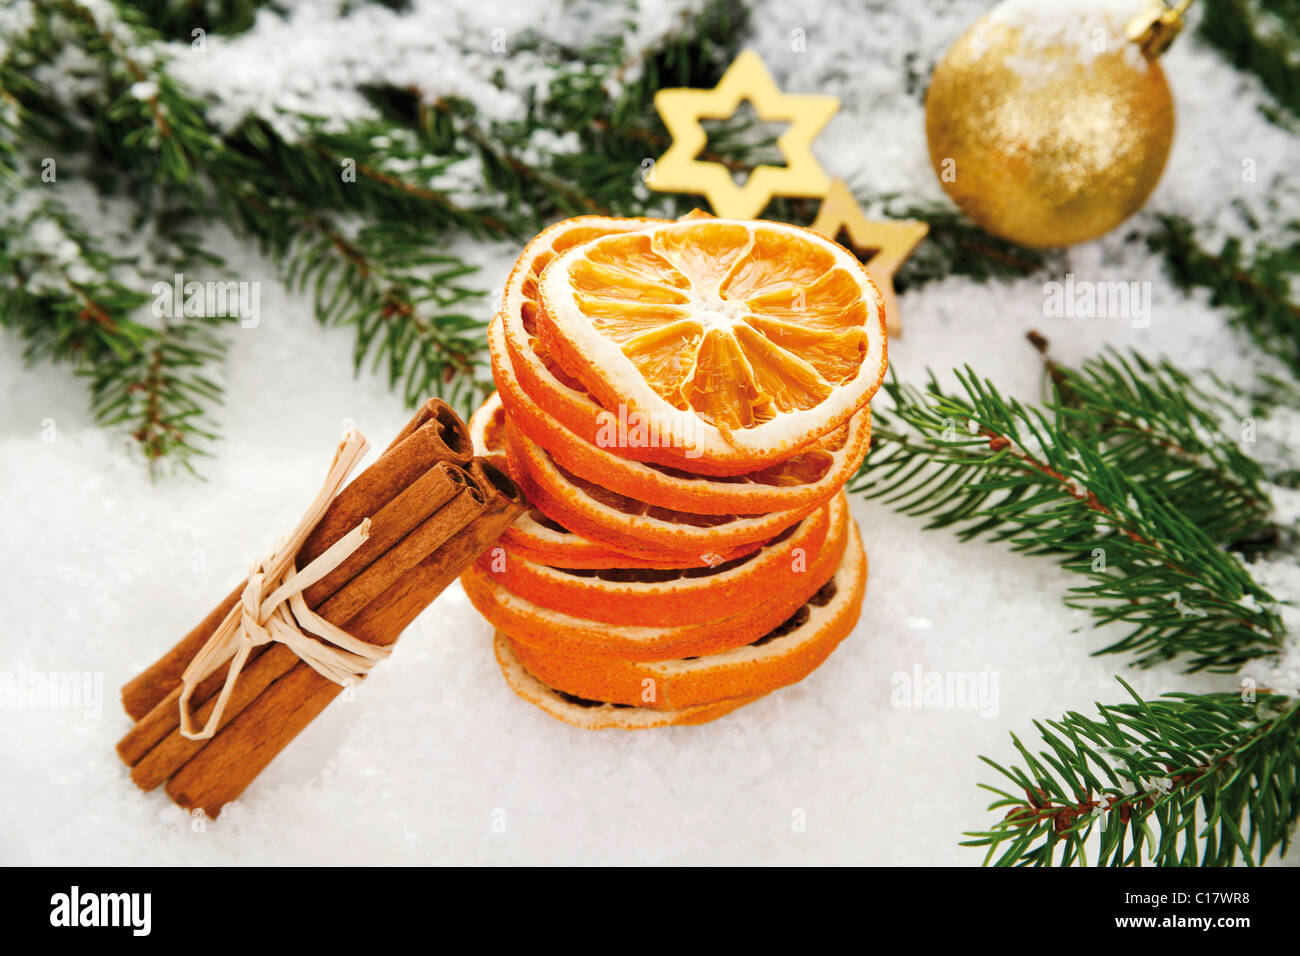 Christmas Decor with Pine Branches, Cones, Orange, Cinnamon Sticks